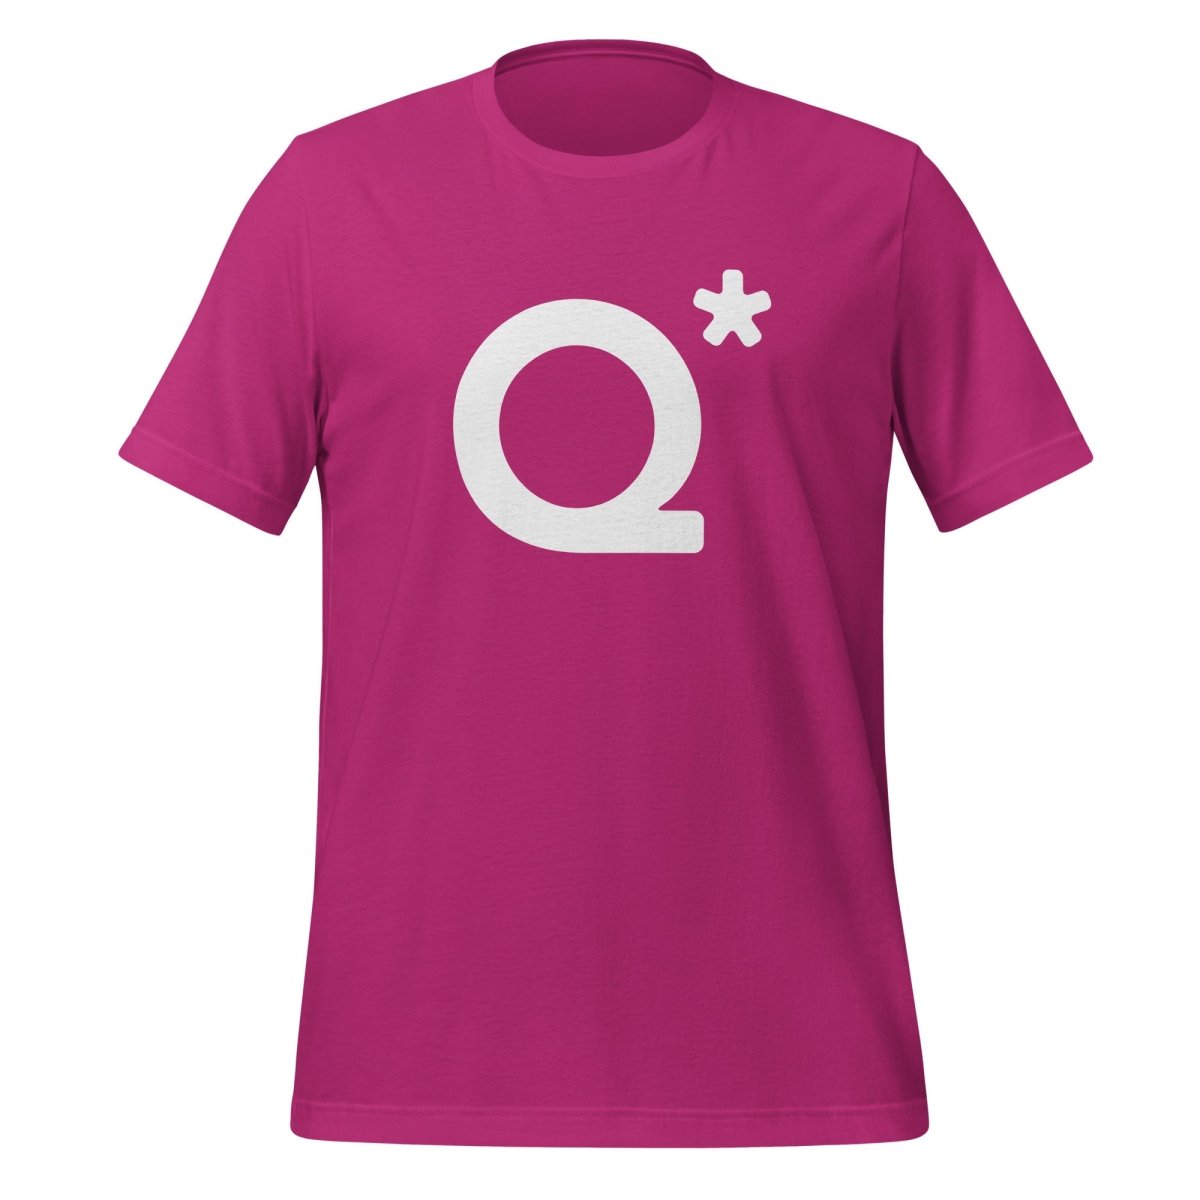 Q* (Q - Star) T - Shirt 1 (unisex) - Berry - AI Store